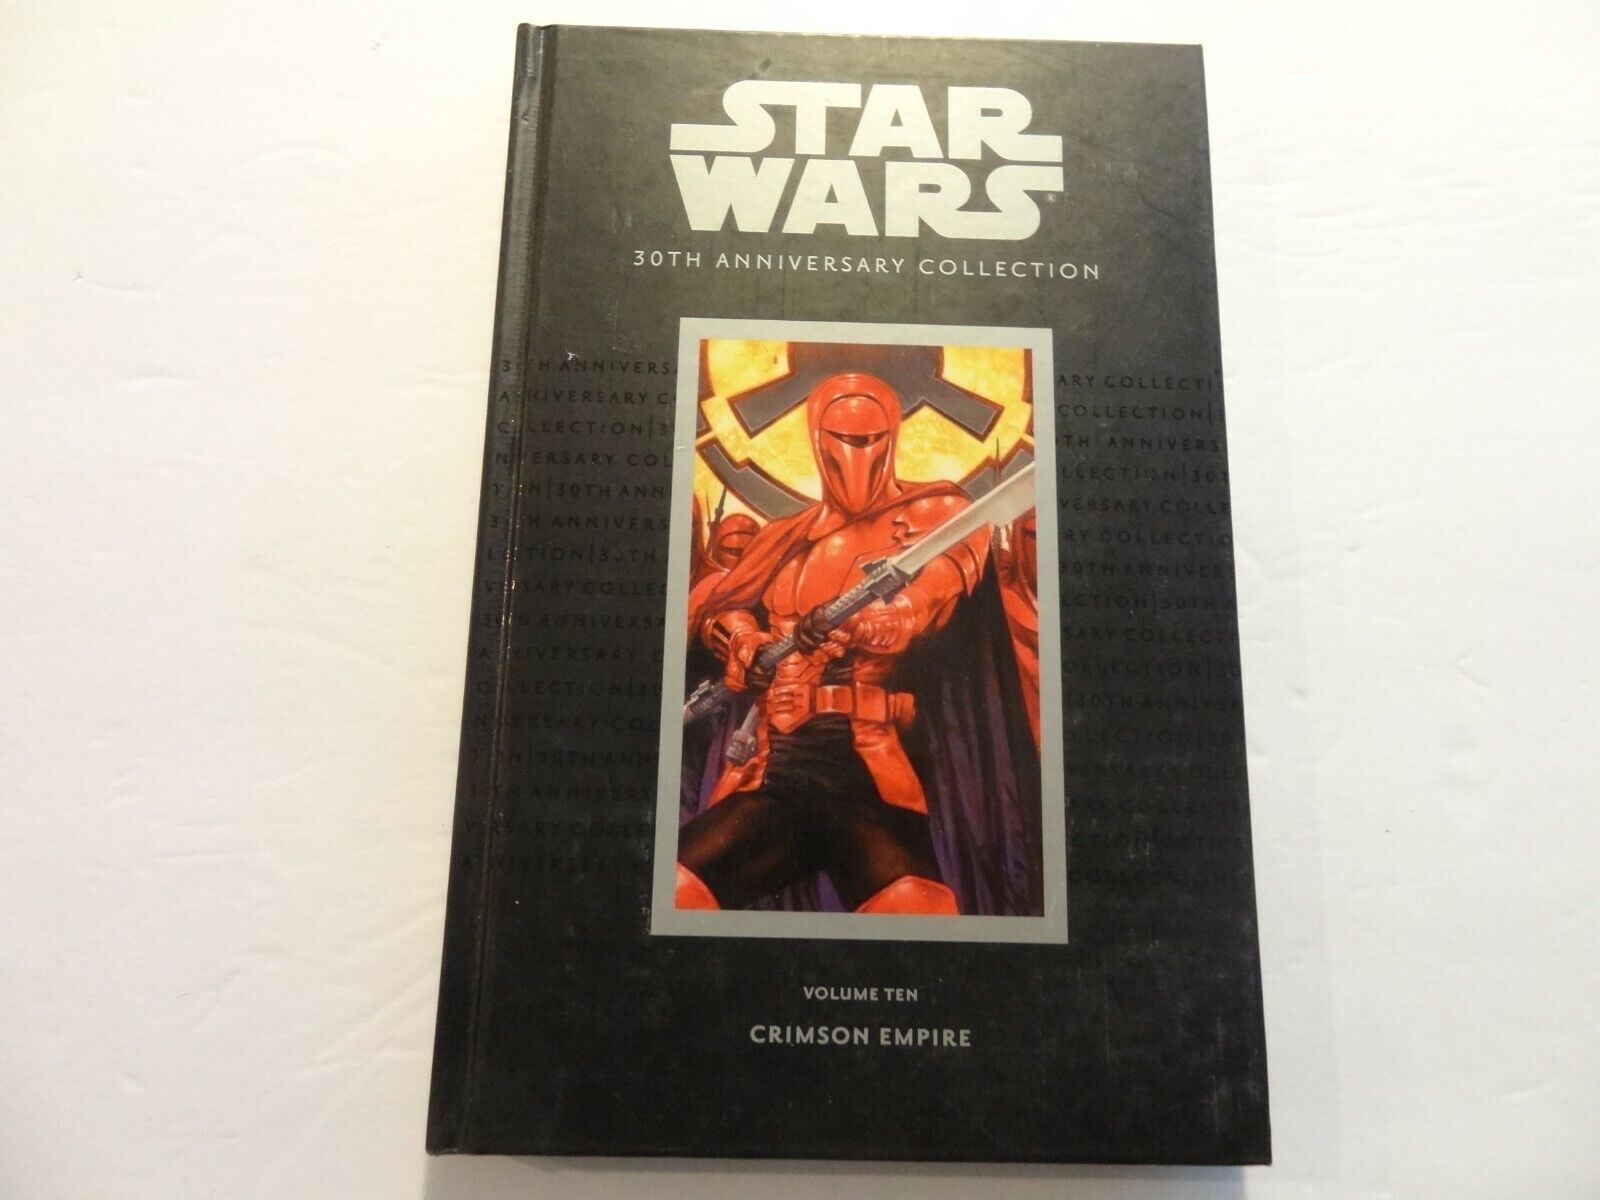 Star Wars 30th Anniversary Collection: Crimson Empire Volume 10 by Randy Stradle